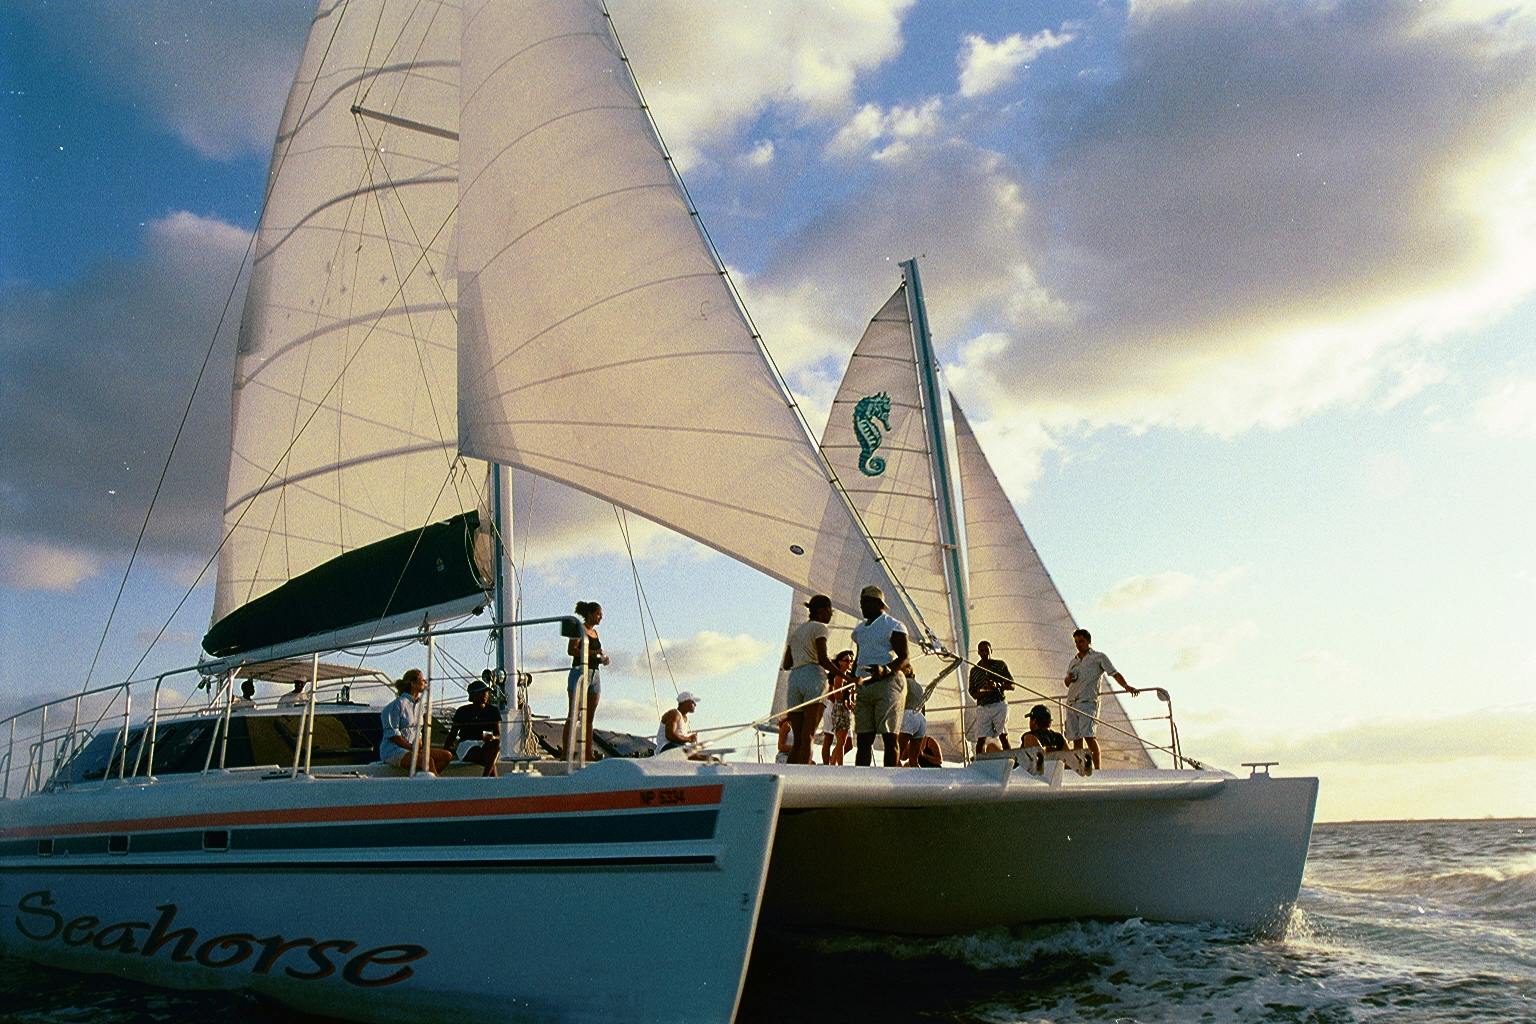 Sail and snorkel catamaran tour in Nassau